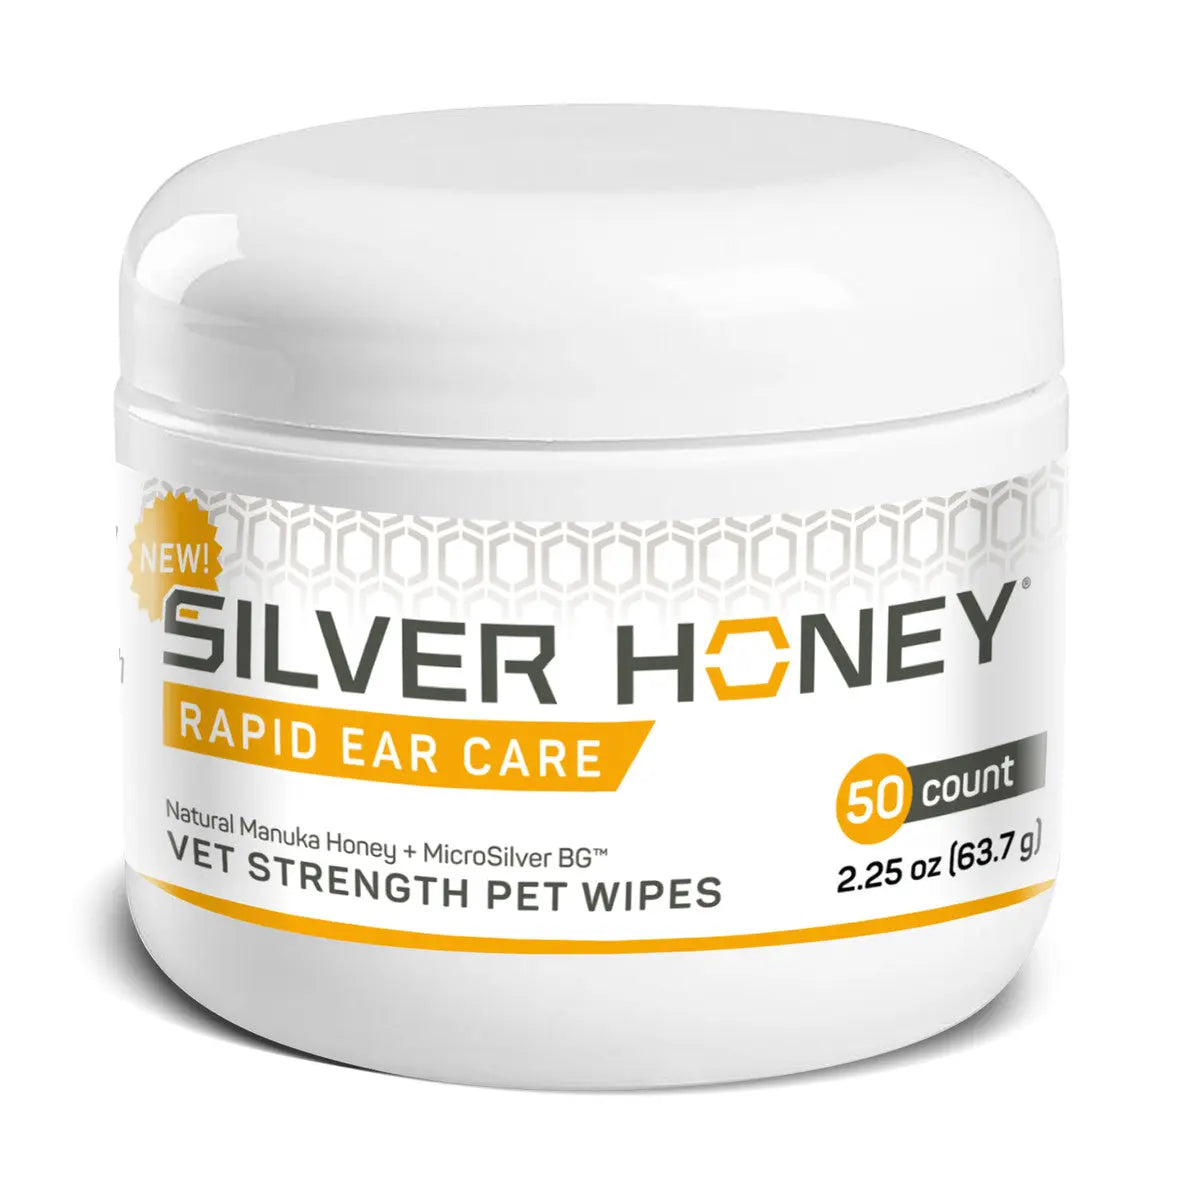 Absorbine Pet Silver Honey Rapid Ear Care Vet Strength Pet Wipes, 50ct, Absorbine Pet